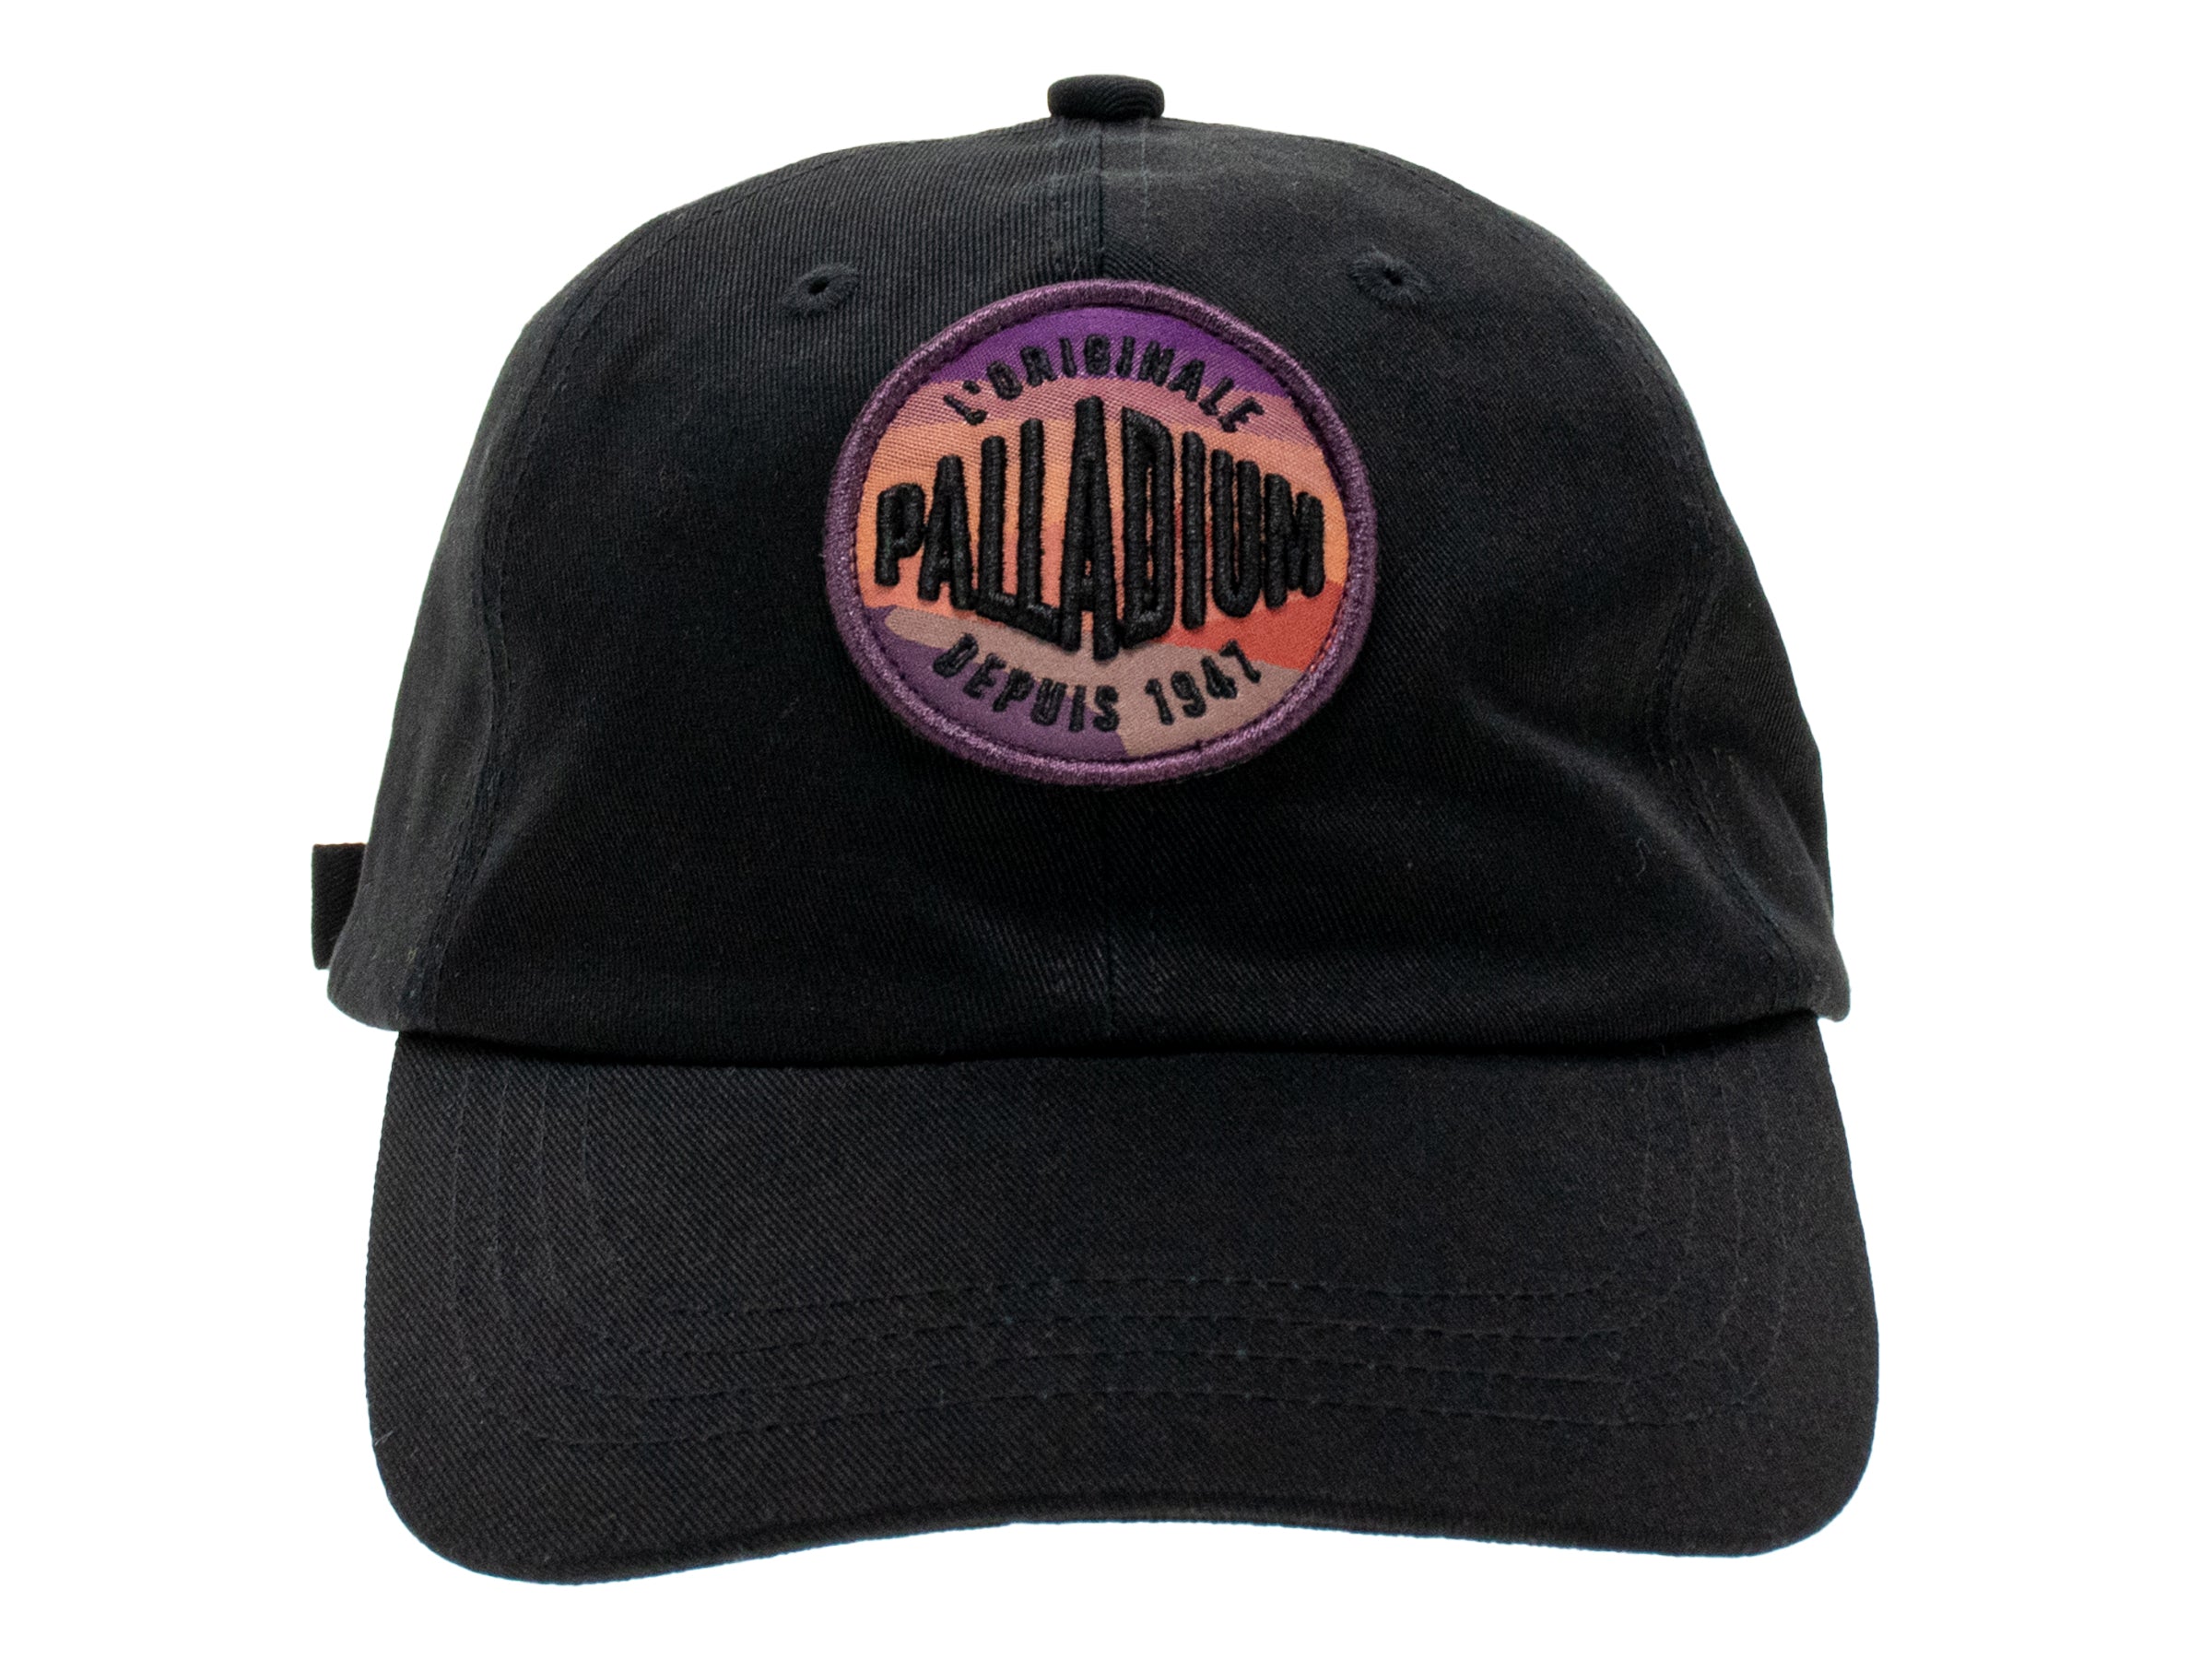 PALLADIUM-US Palladium Boots Nogrid Oasis Patches Cap Black - BLACK - Size: One Size